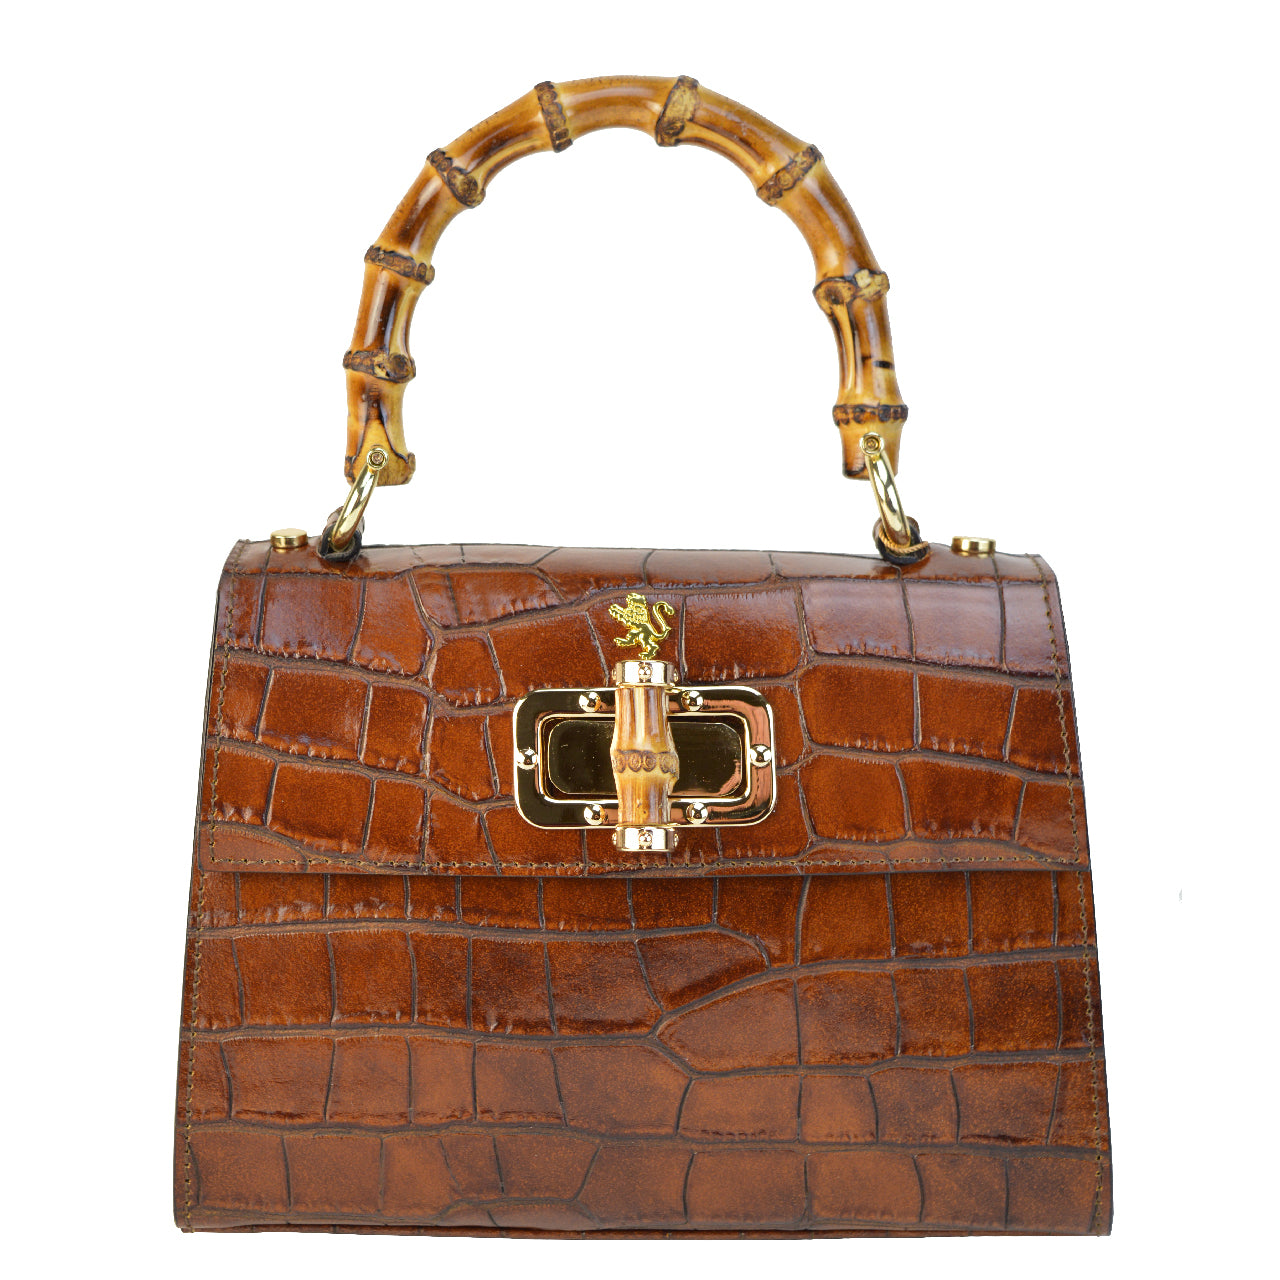 Pratesi Castalia Lady Bag in genuine Italian leather - Croco Embossed Leather Brown